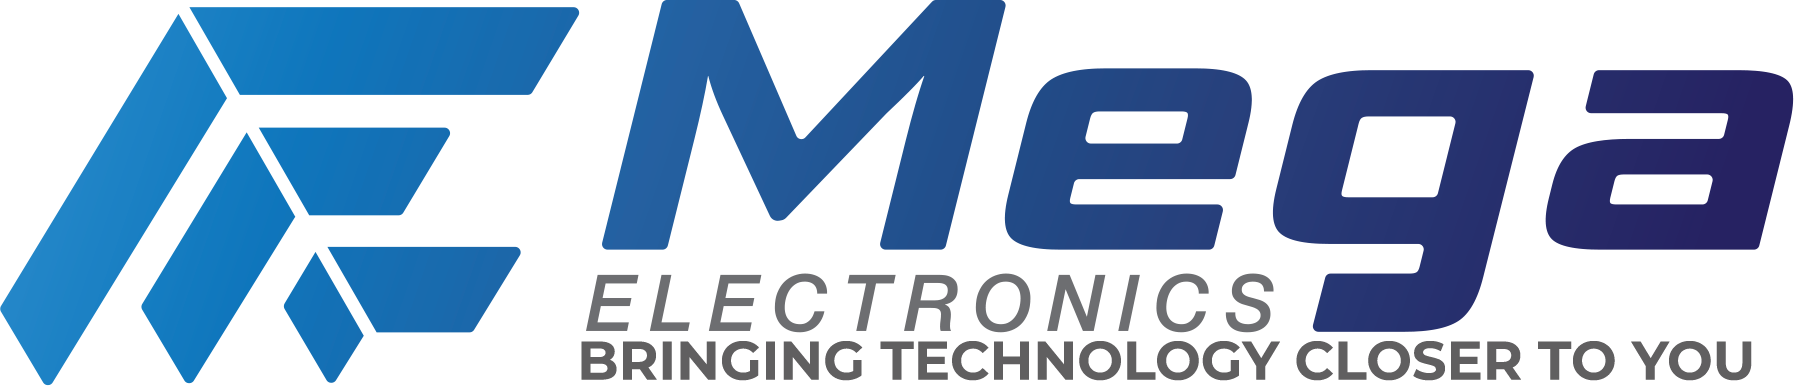 Mega electronics company logo